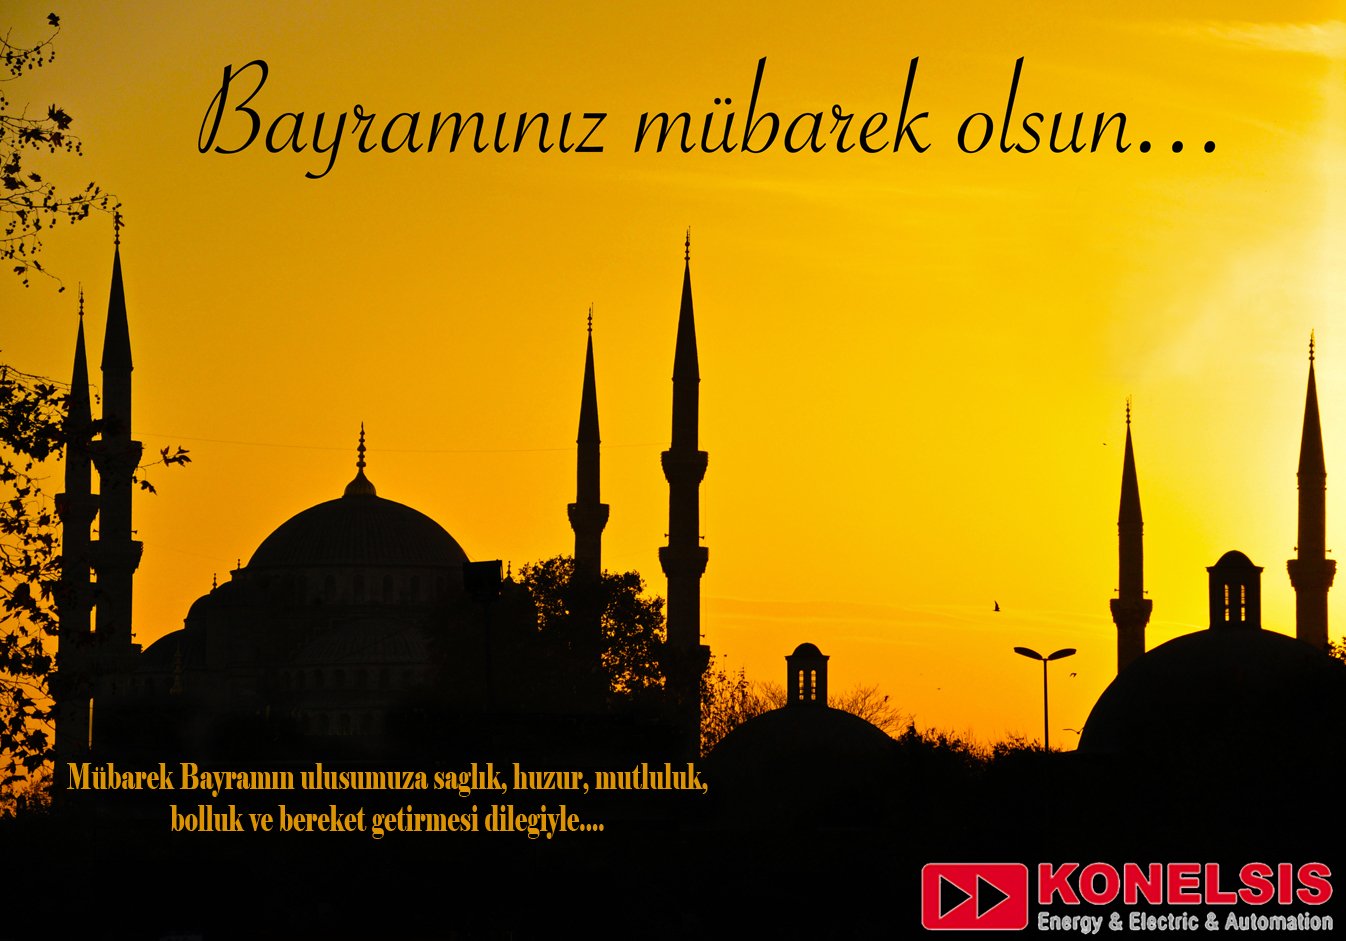 Ураза на турецком. Поздравление с Ураза байрам на турецком языке. Рамазан байрам поздравление на турецком языке. Открытки с Ураза байрам на турецком языке. Ураза байрам открытки на турецком.